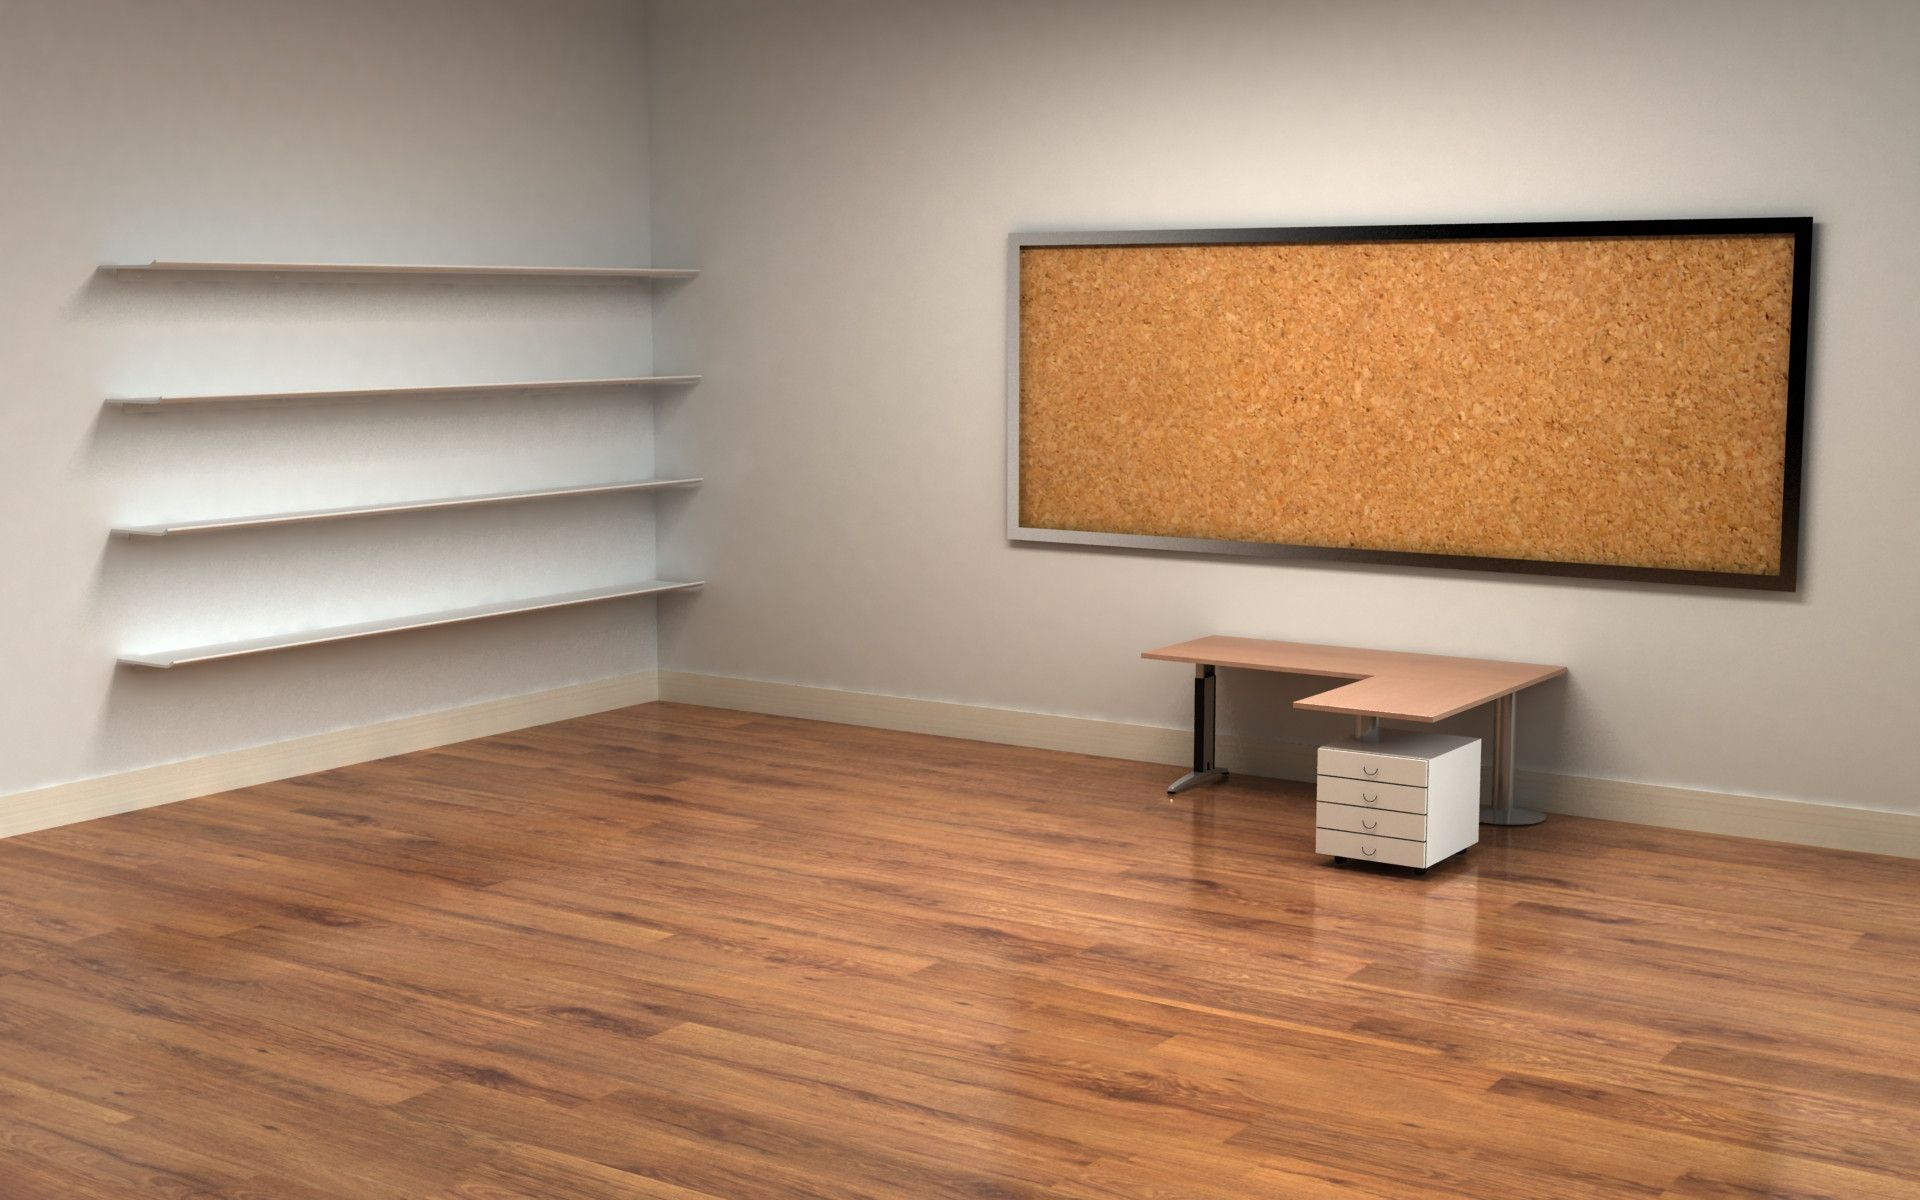 wallpaper pickywallpapers com,floor,laminate flooring,wood flooring,room,property